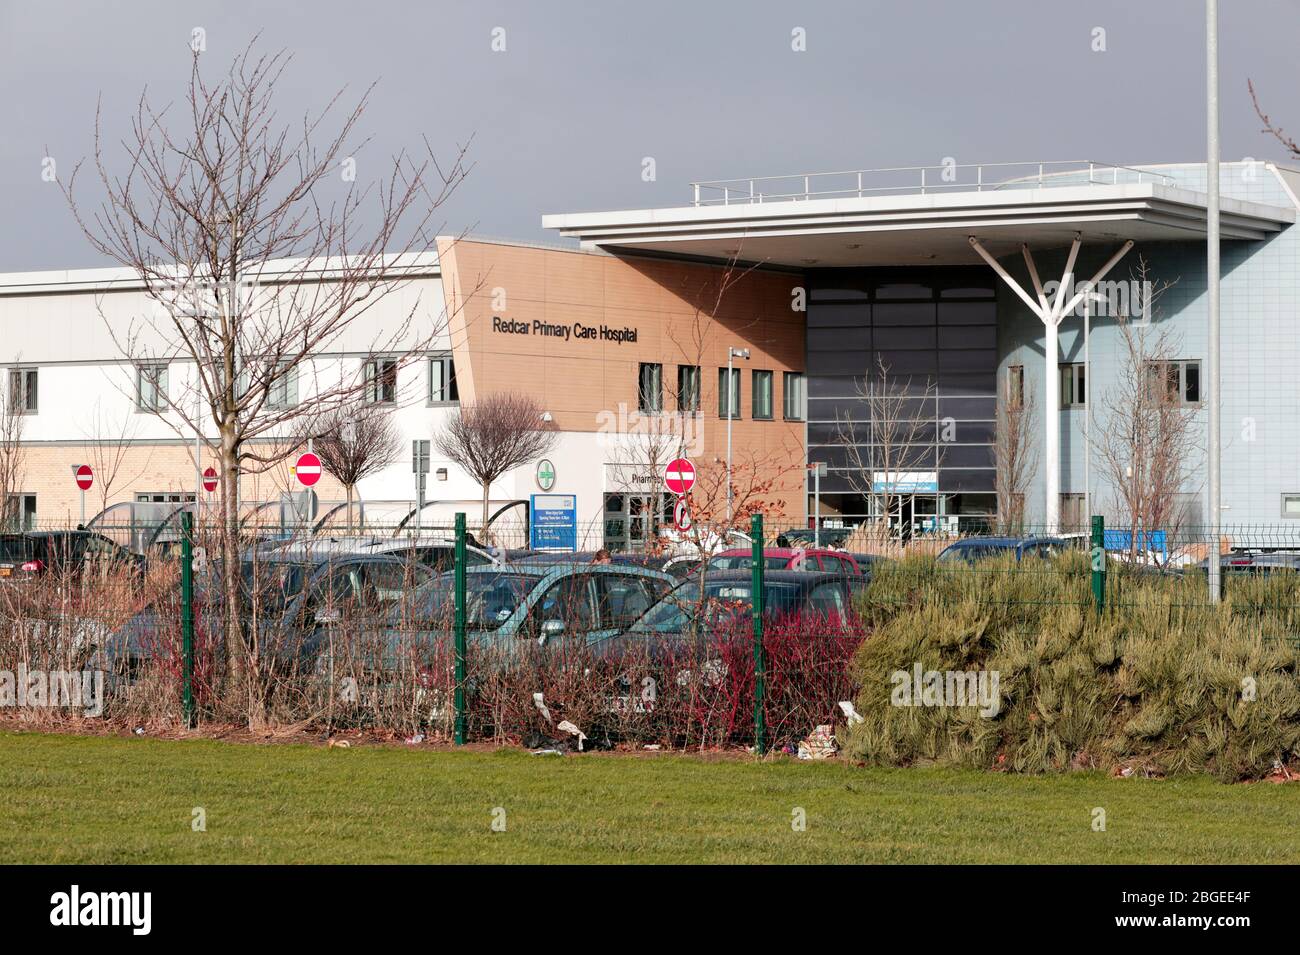 Redcar Primary Care Hospital, Redcar and Cleveland, UK. 2/2/2018. Photograph: Stuart Boulton. Stock Photo